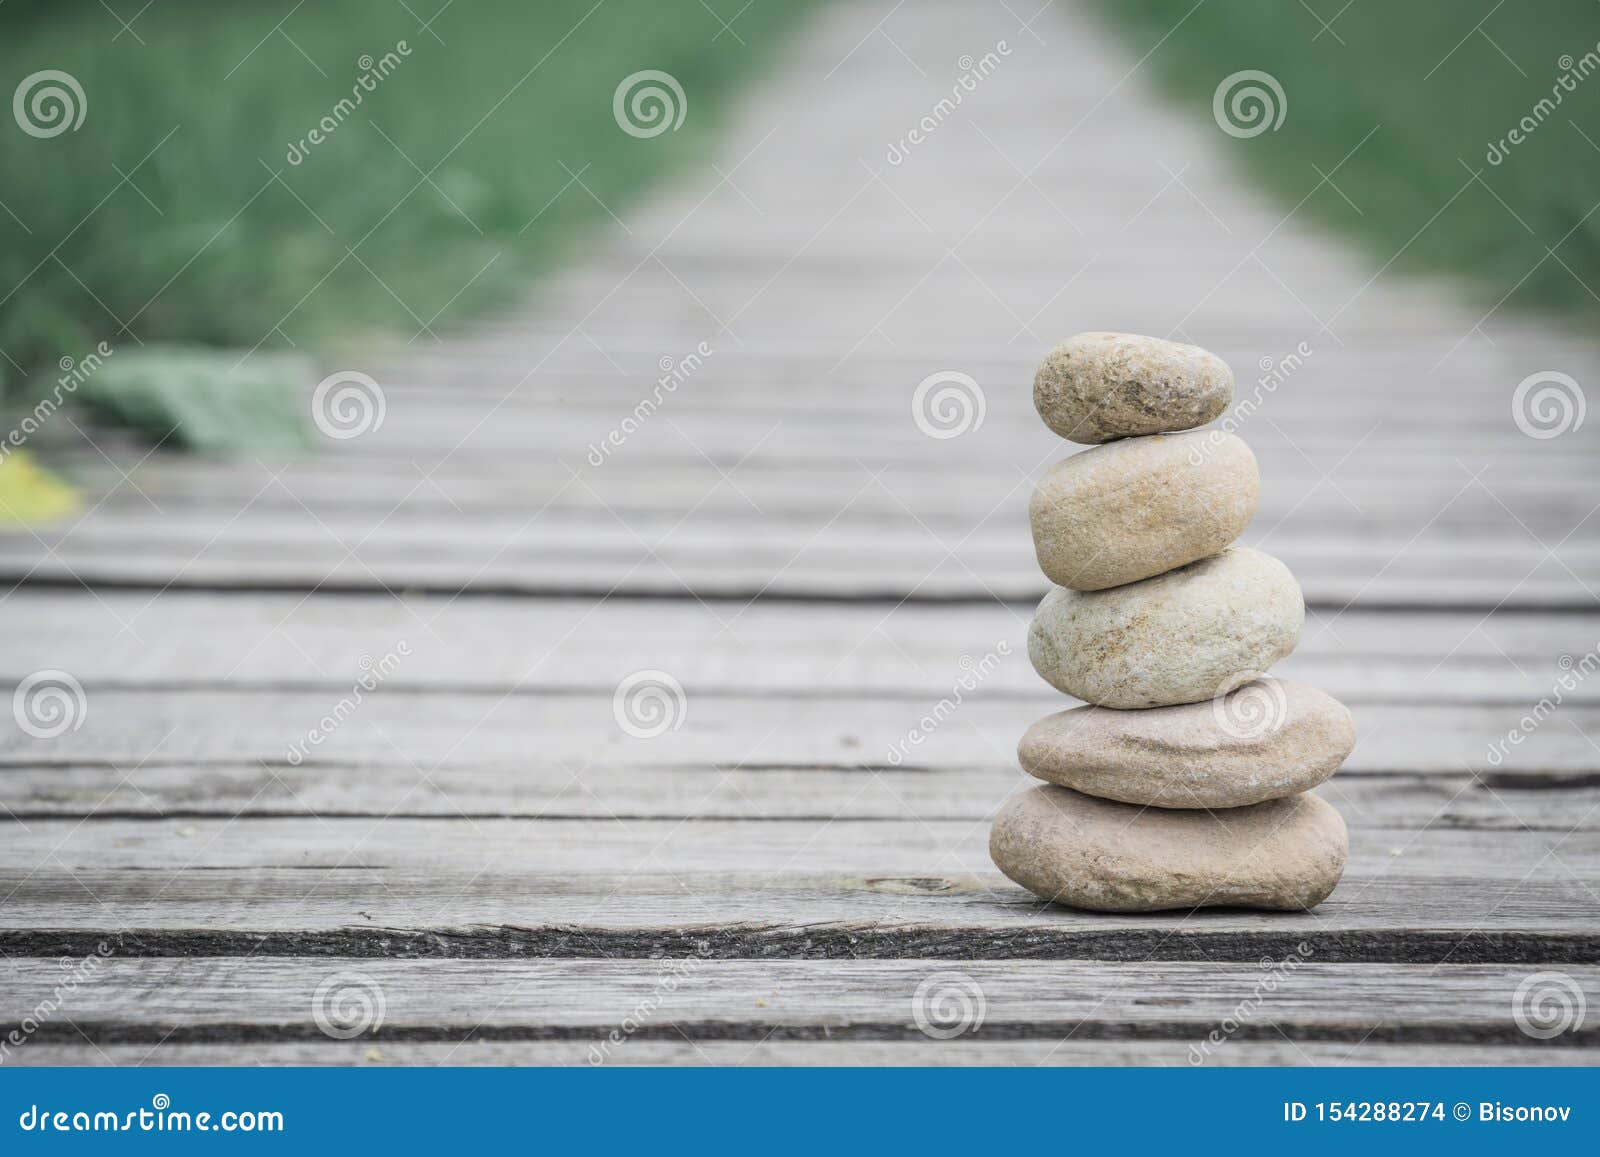 Zen Stones Balance Stock Photo Image Of Concept Relaxation